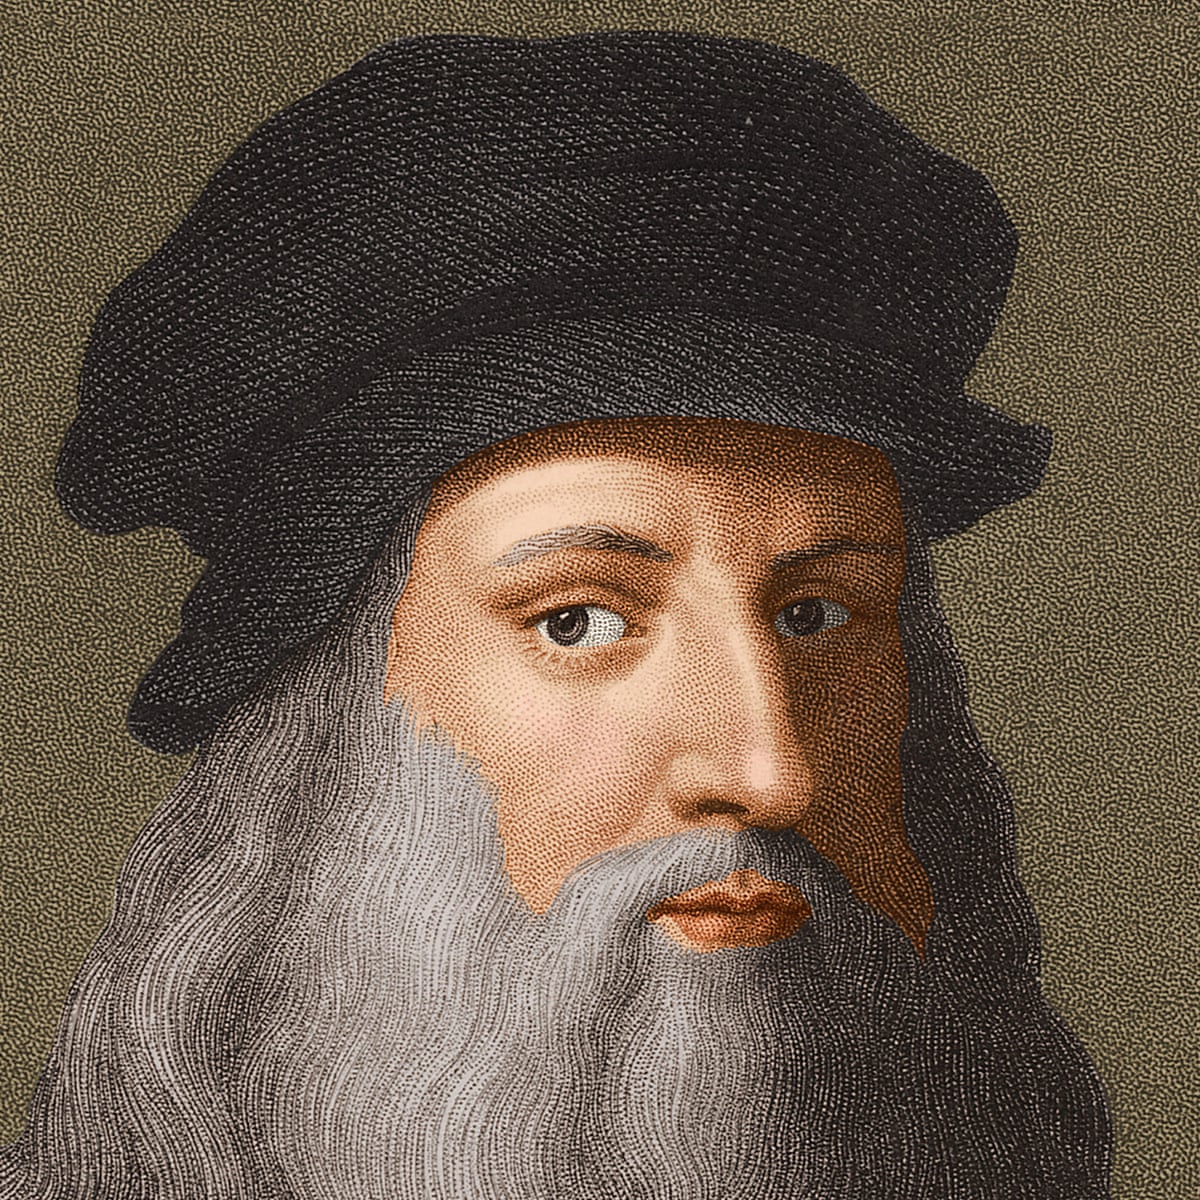 Tuscan archives yield up secrets of Leonardo's mystery mother | Leonardo da  Vinci | The Guardian